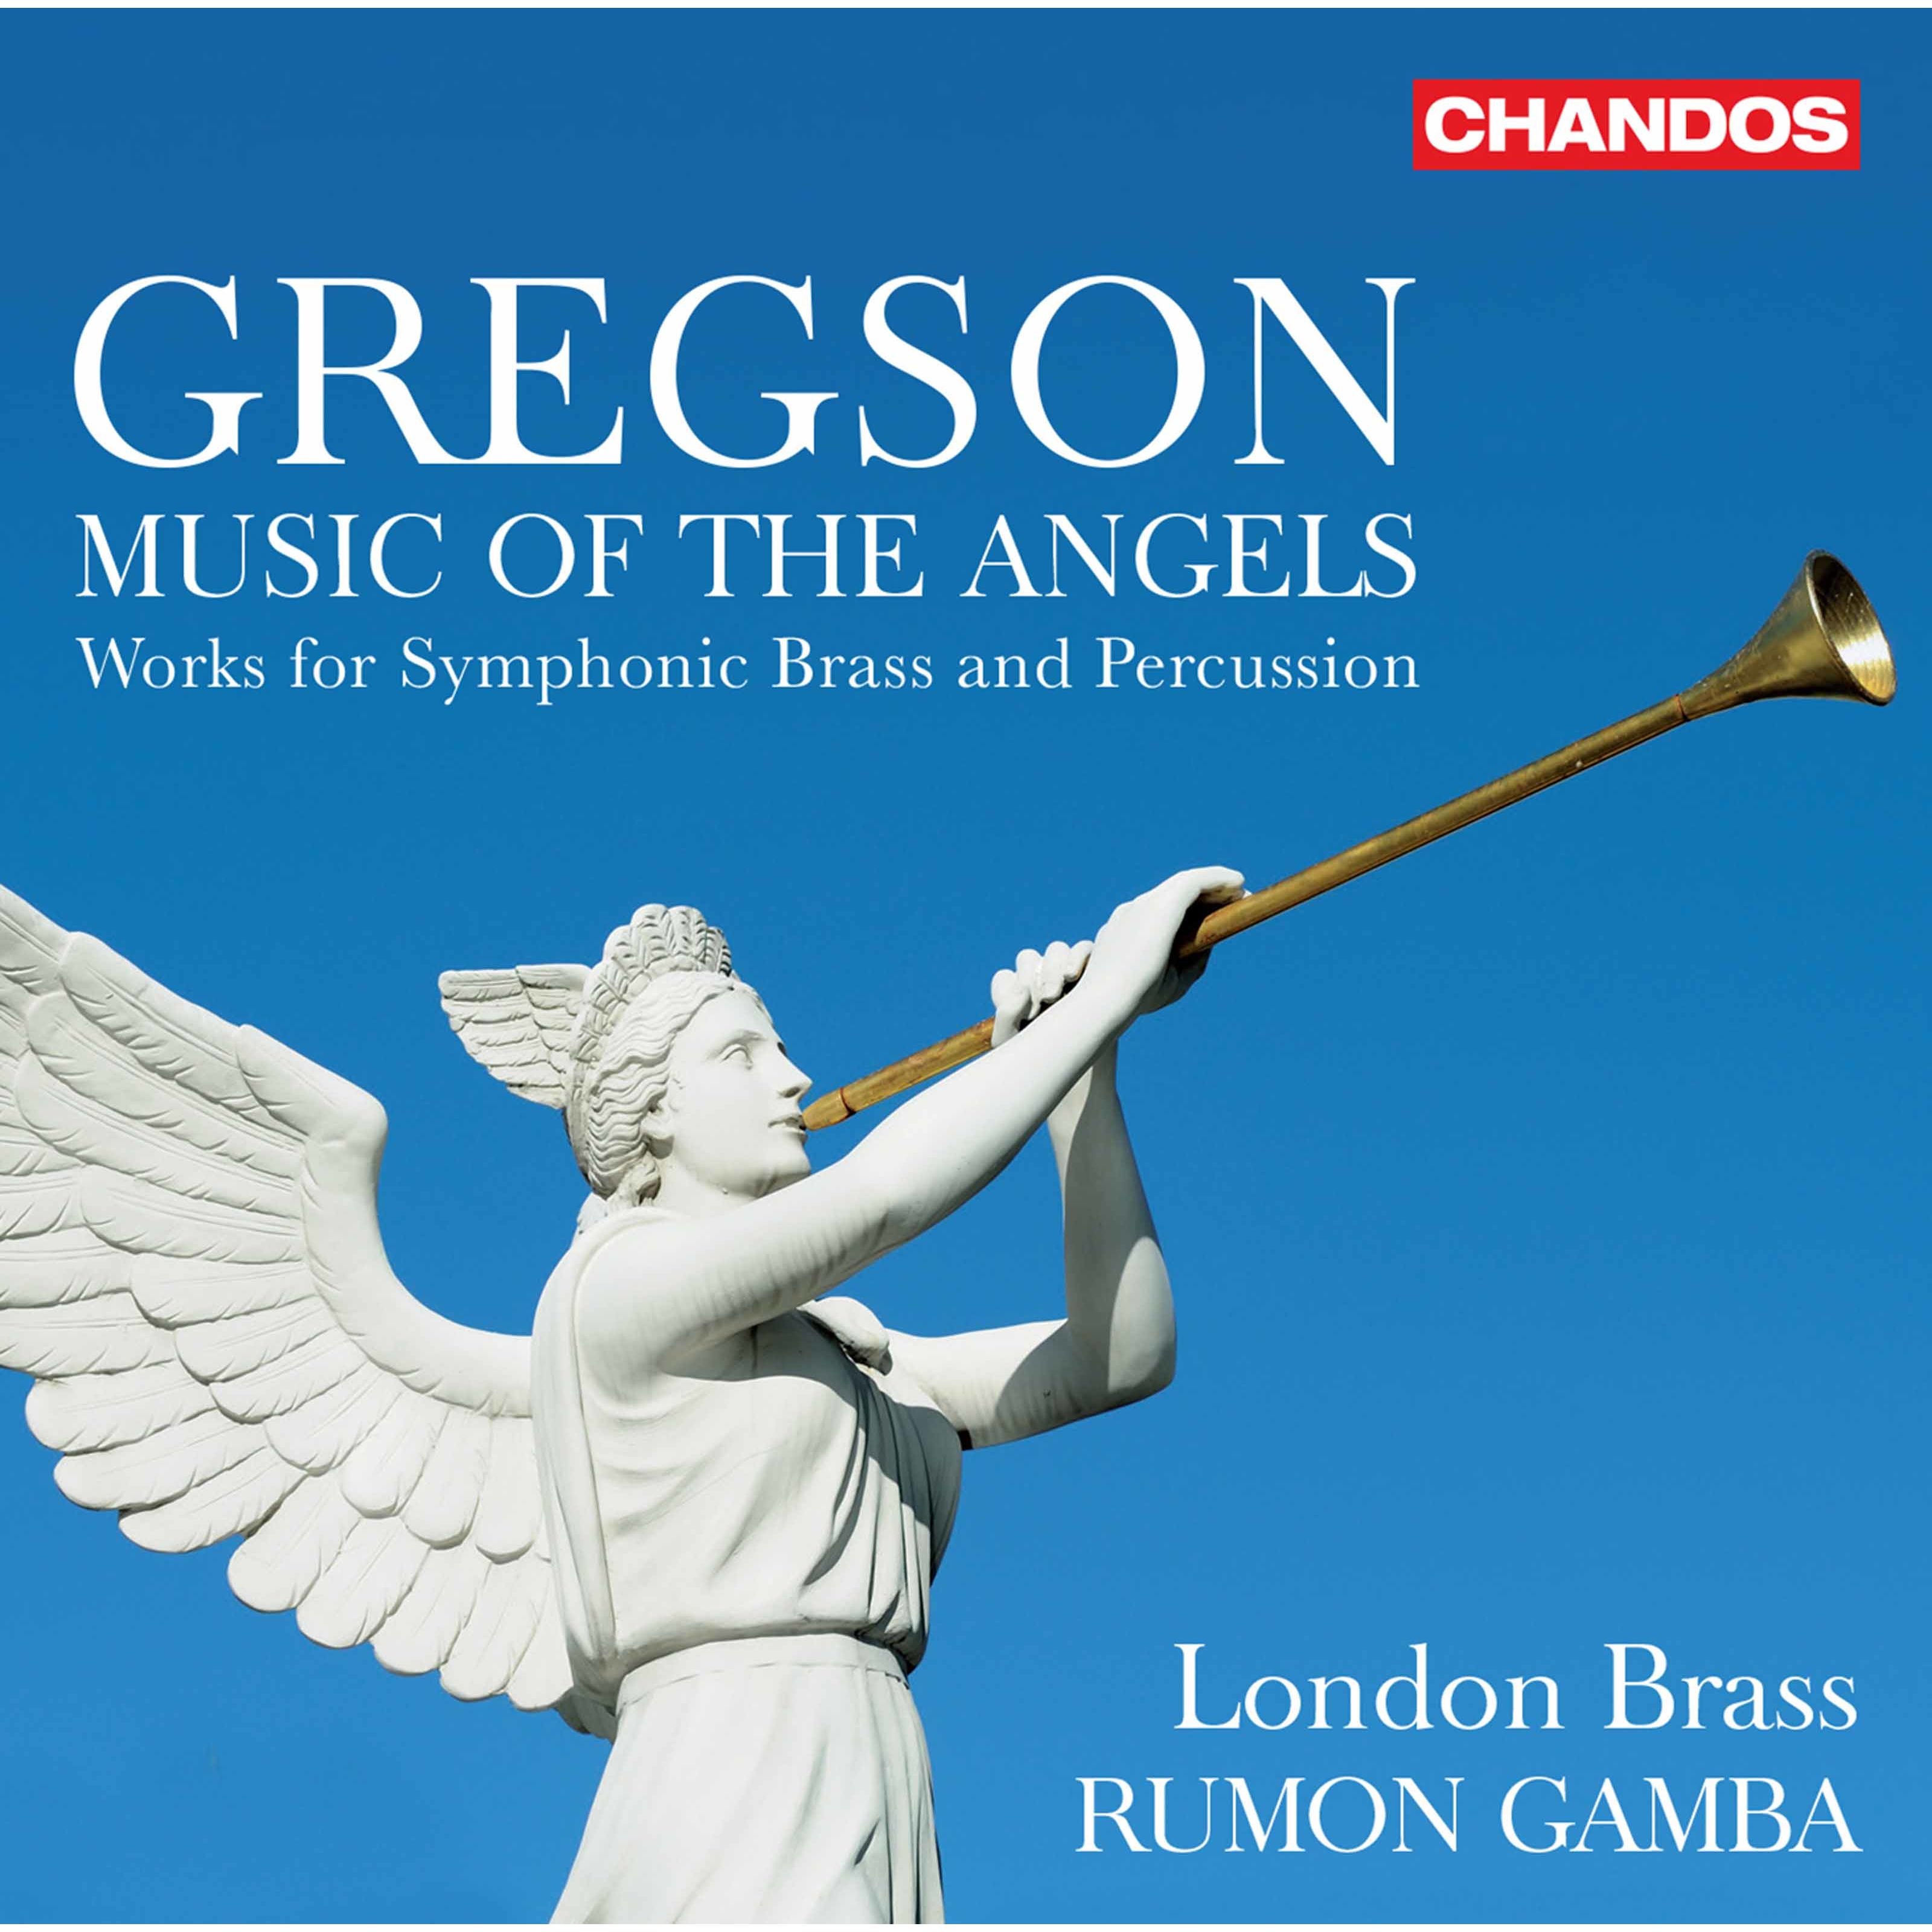 London Brass, Rumon Gamba – Music of the Angels (2020) [FLAC 24bit/96kHz]